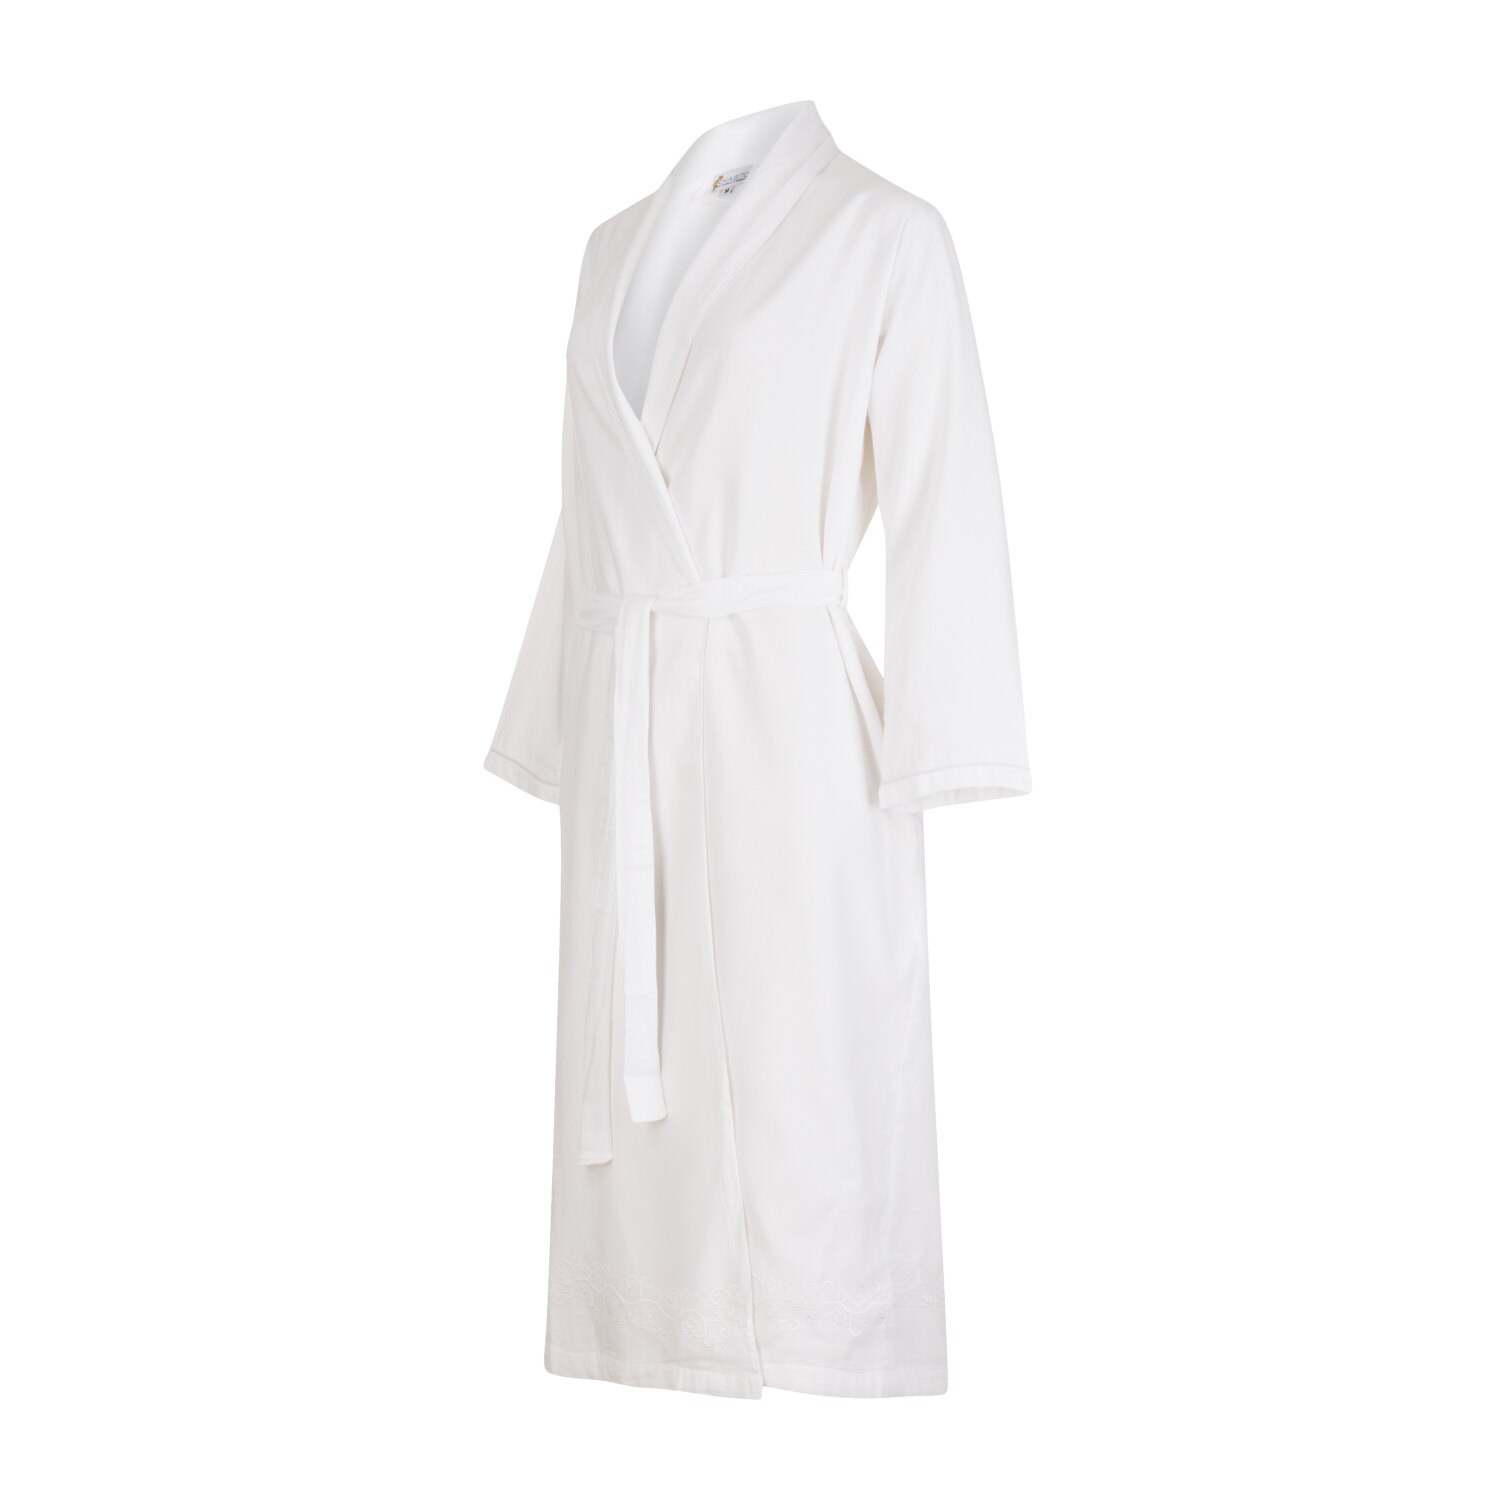 Robe for Women White 100% cotton handmade premium | Etsy